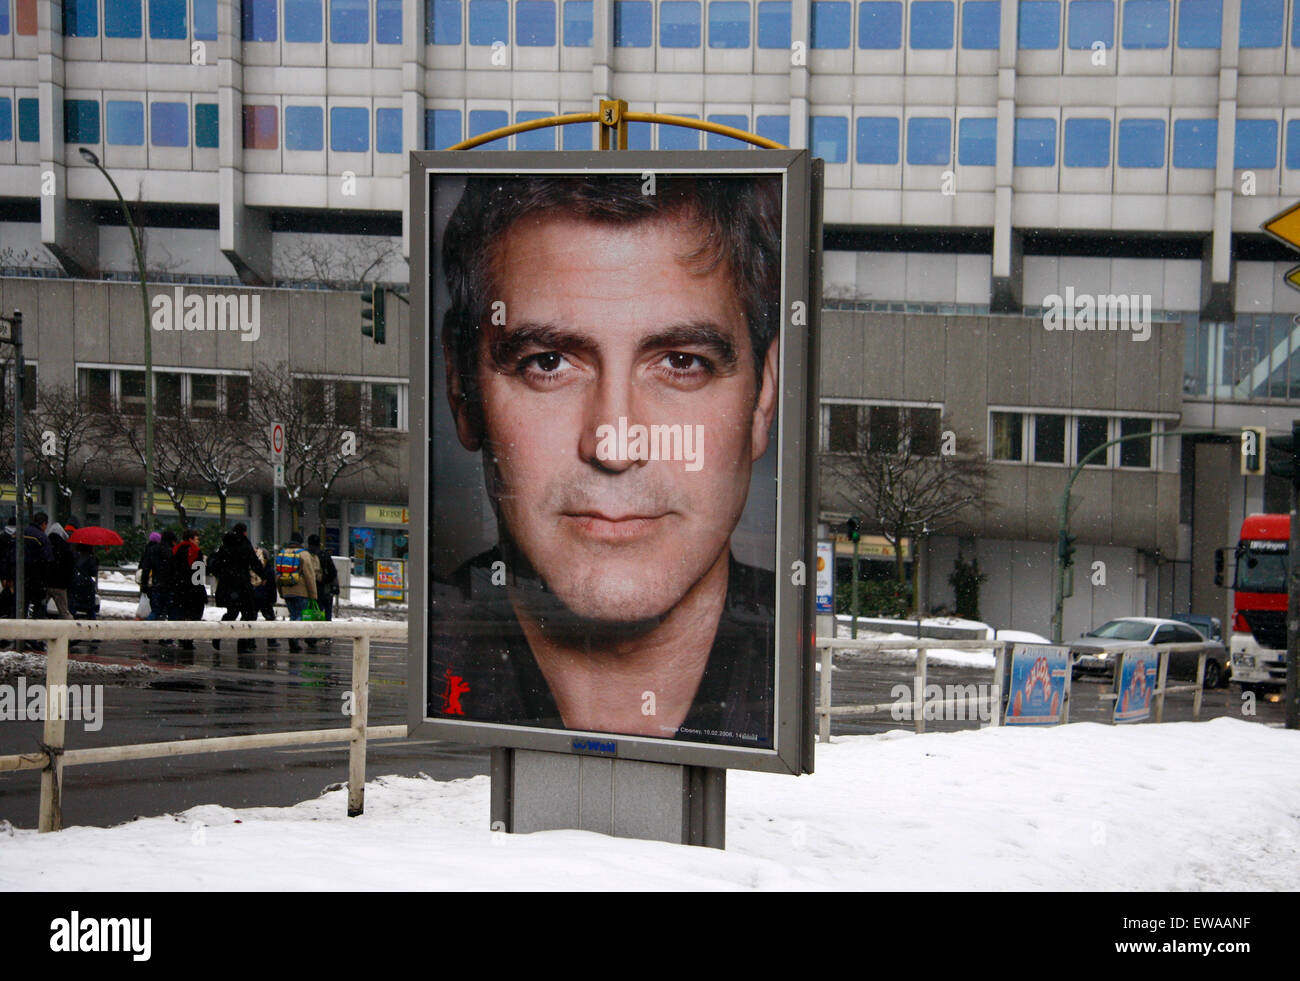 George Clooney - Schauspieler-Portraits im Schnee : Berlinale 2010 - Impressionen,12. Februar 2010, Berlin. Banque D'Images